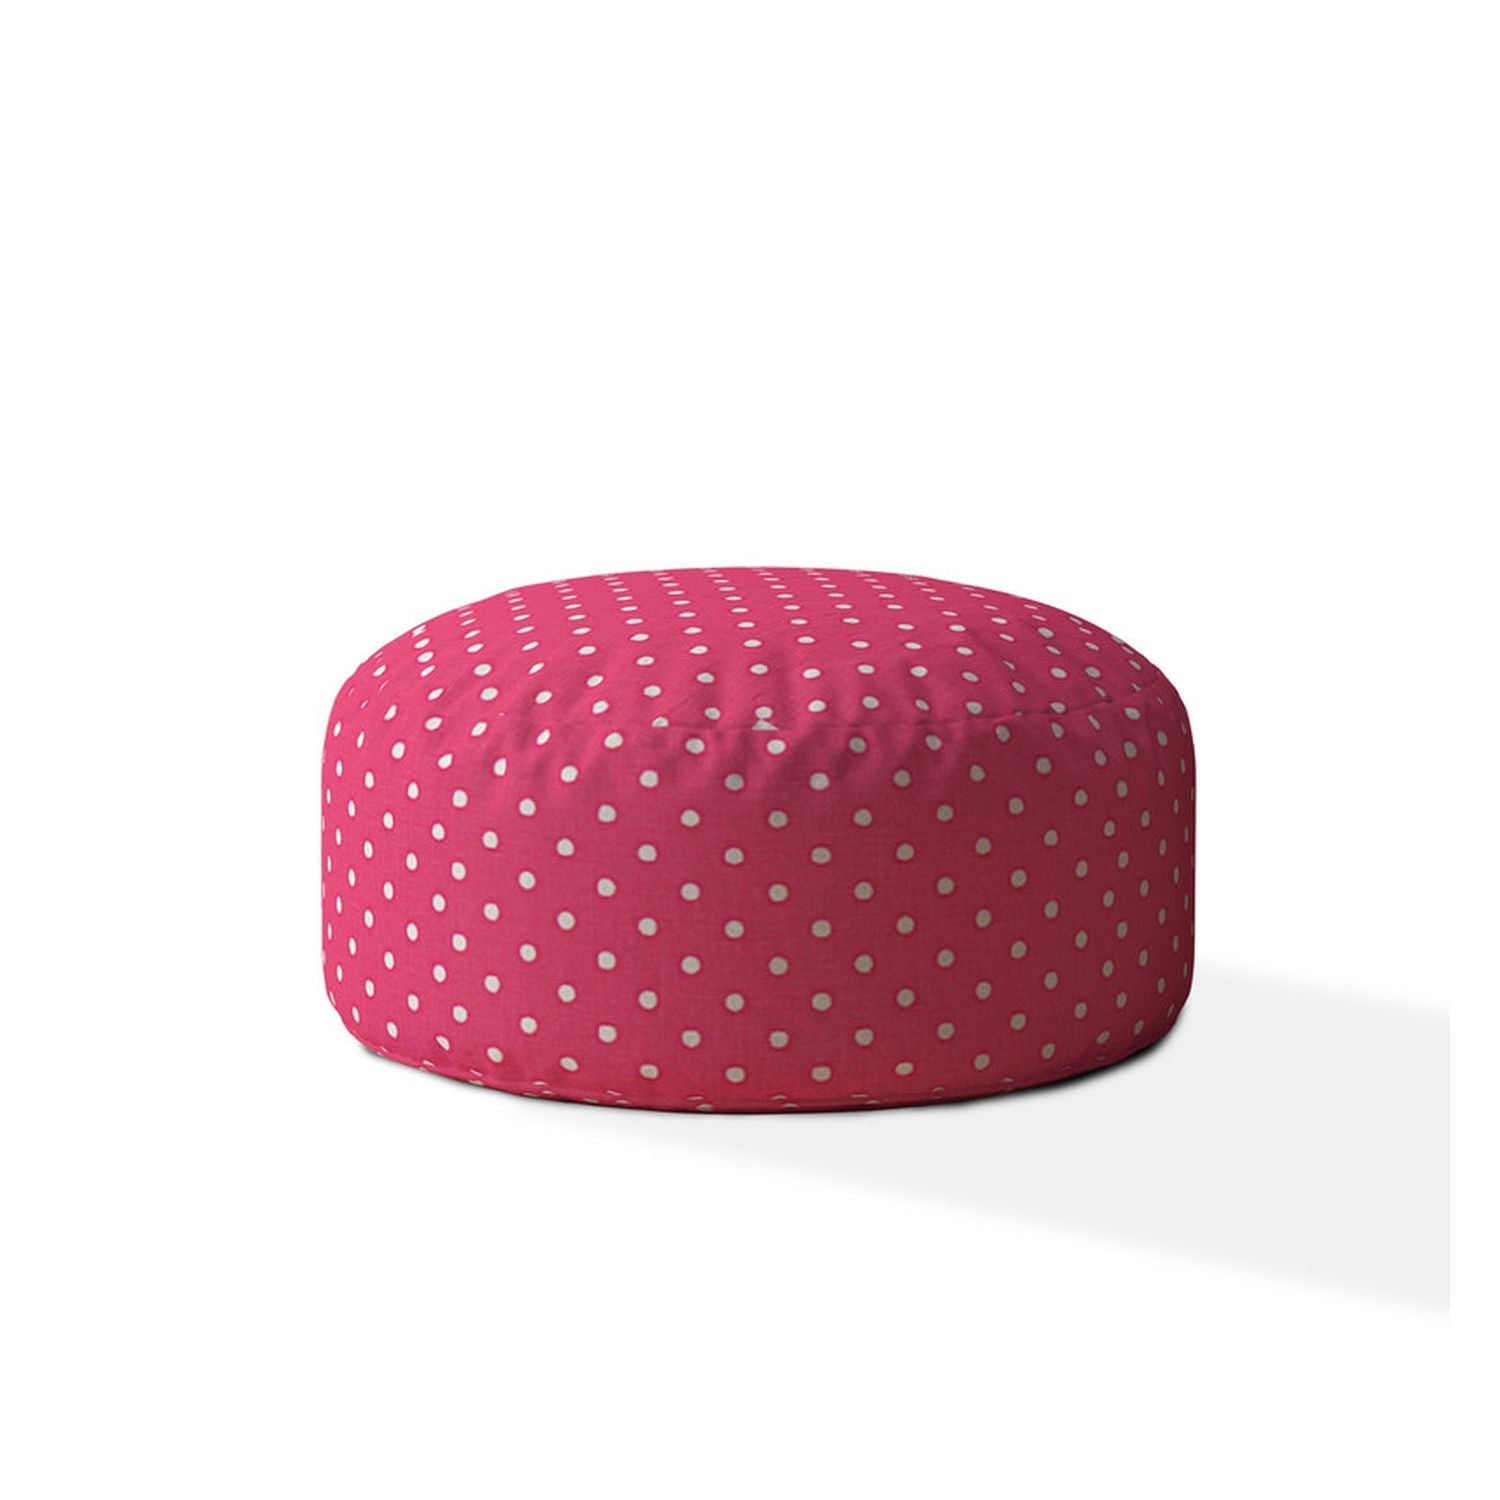 24" Pink And White Cotton Round Polka Dots Pouf Ottoman